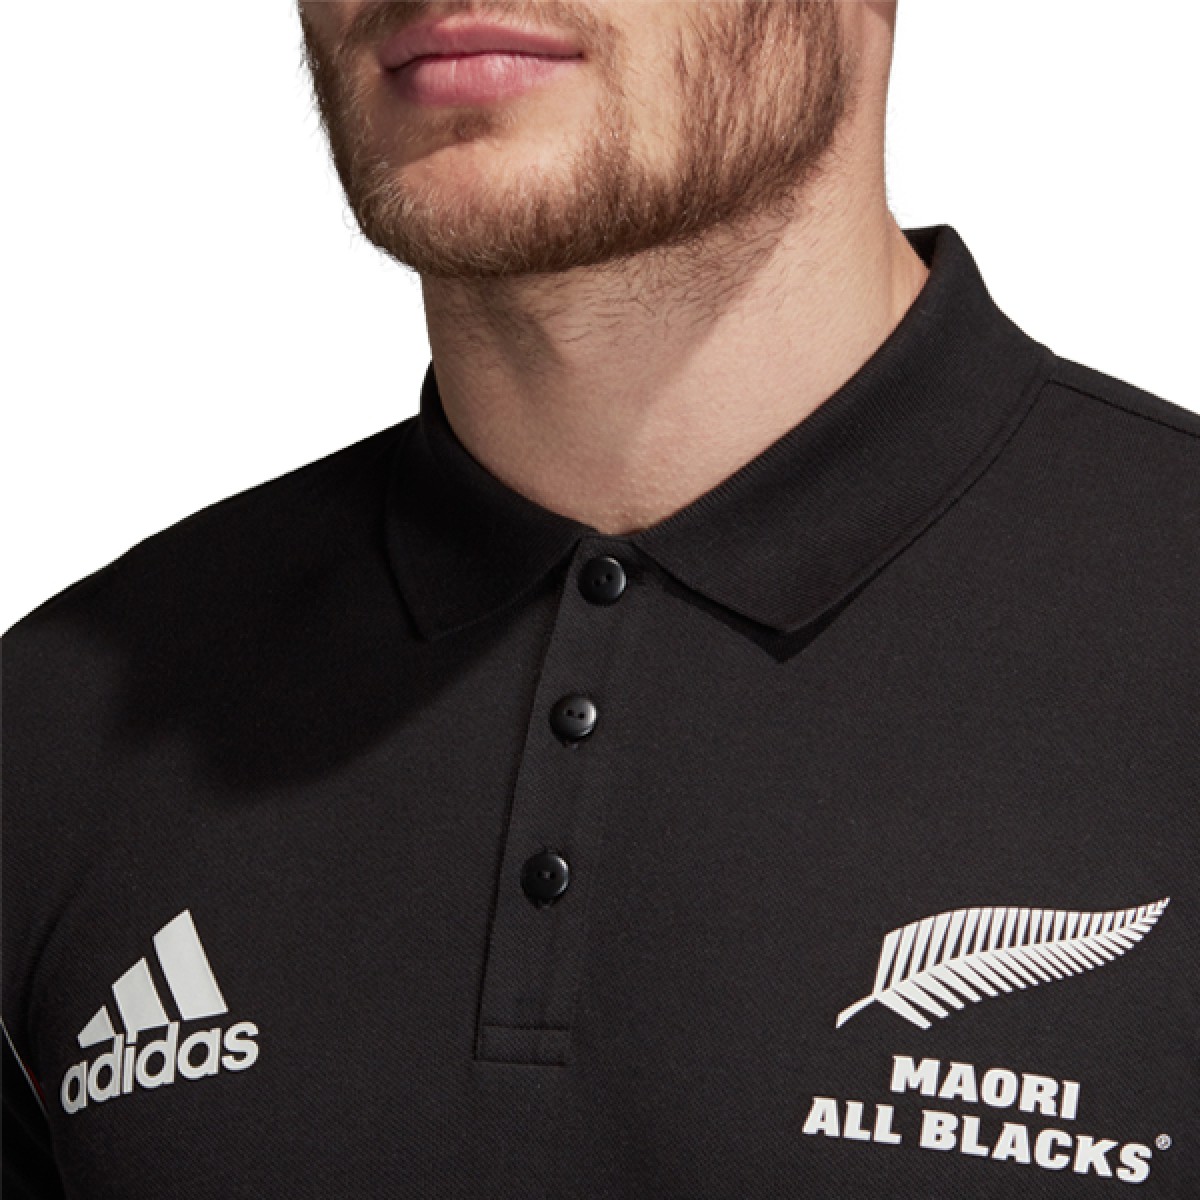 2018 New Zealand MAORI All Blacks performance rugby jersey shirt S-3XL 